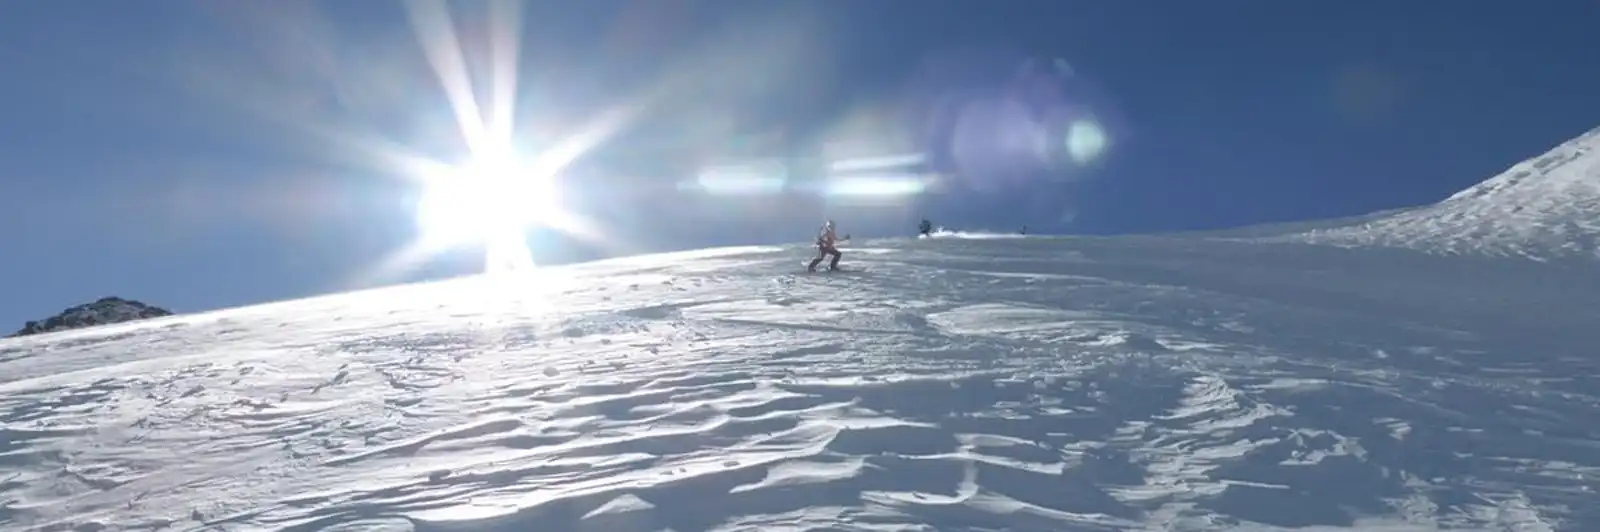 Get ready to ski tour Chamonix Zermatt! post image